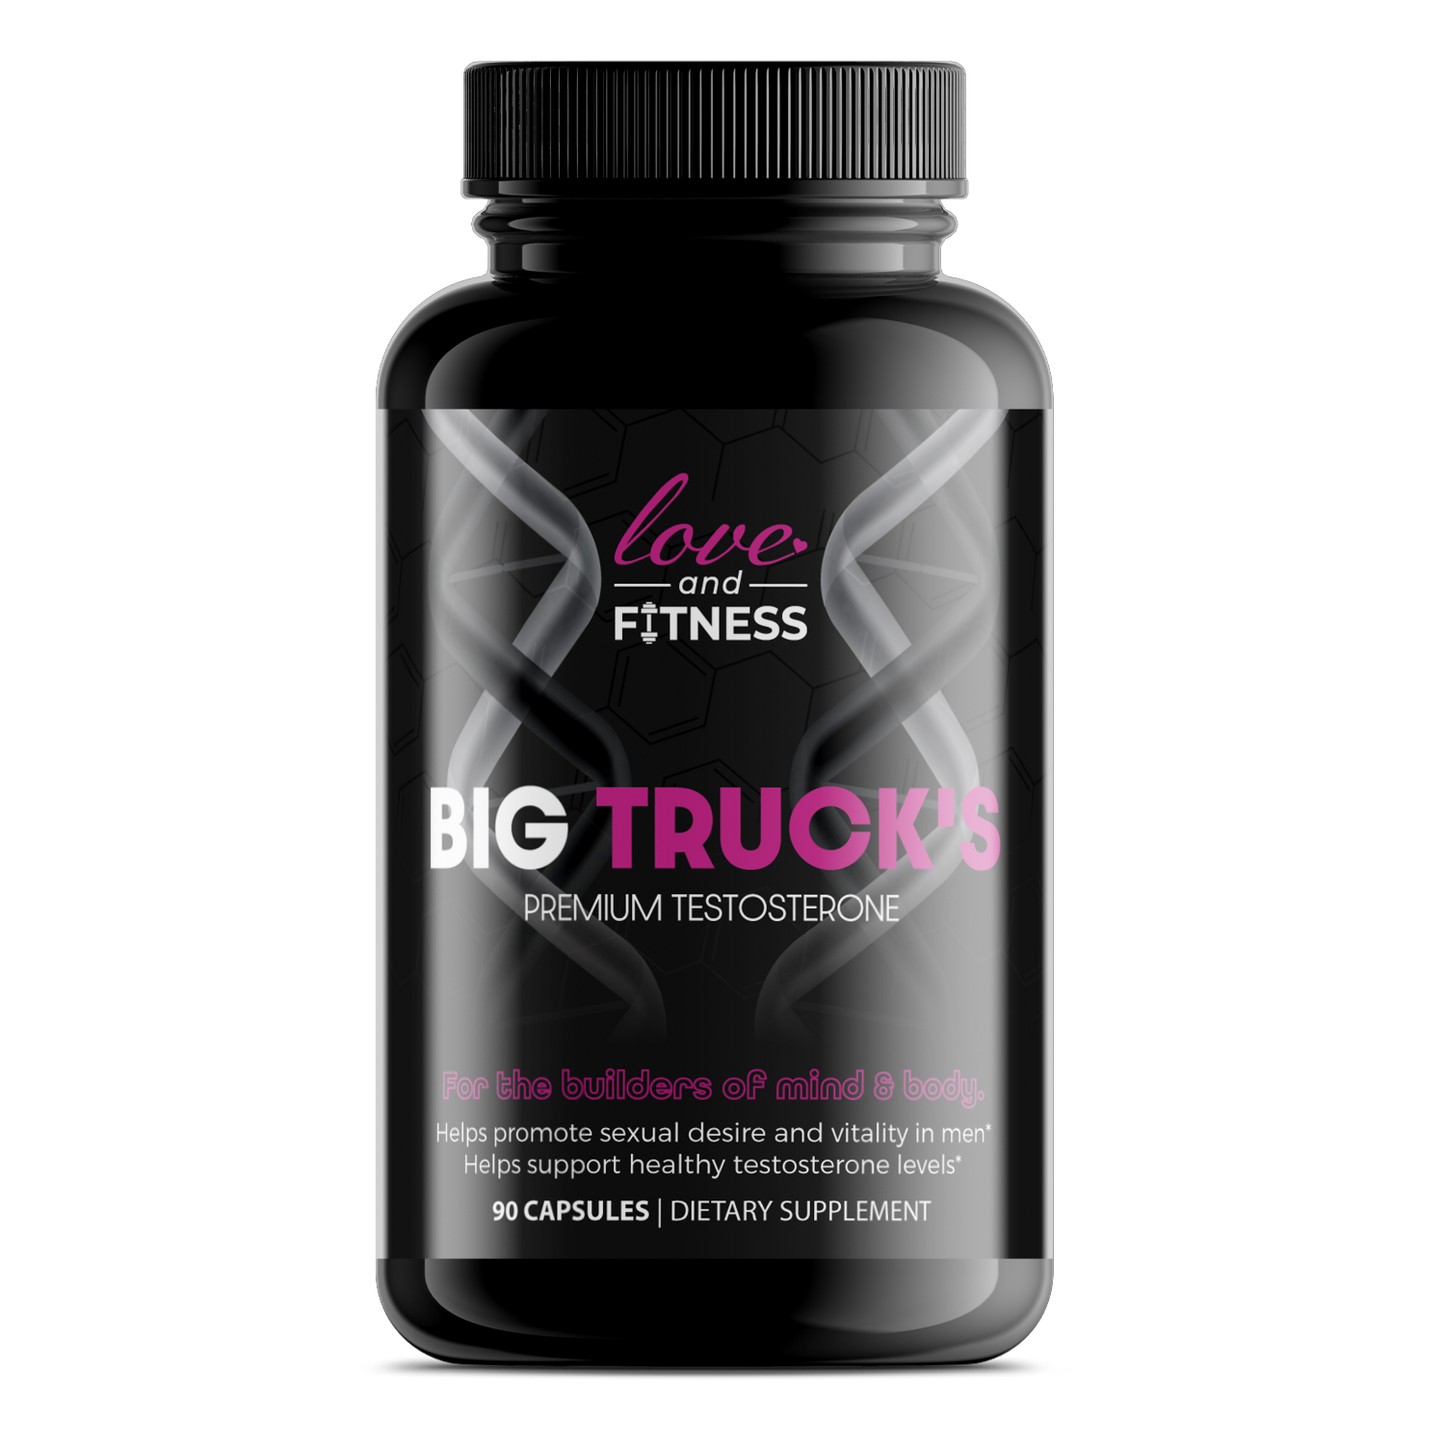 Big Truck's Premium Testosterone